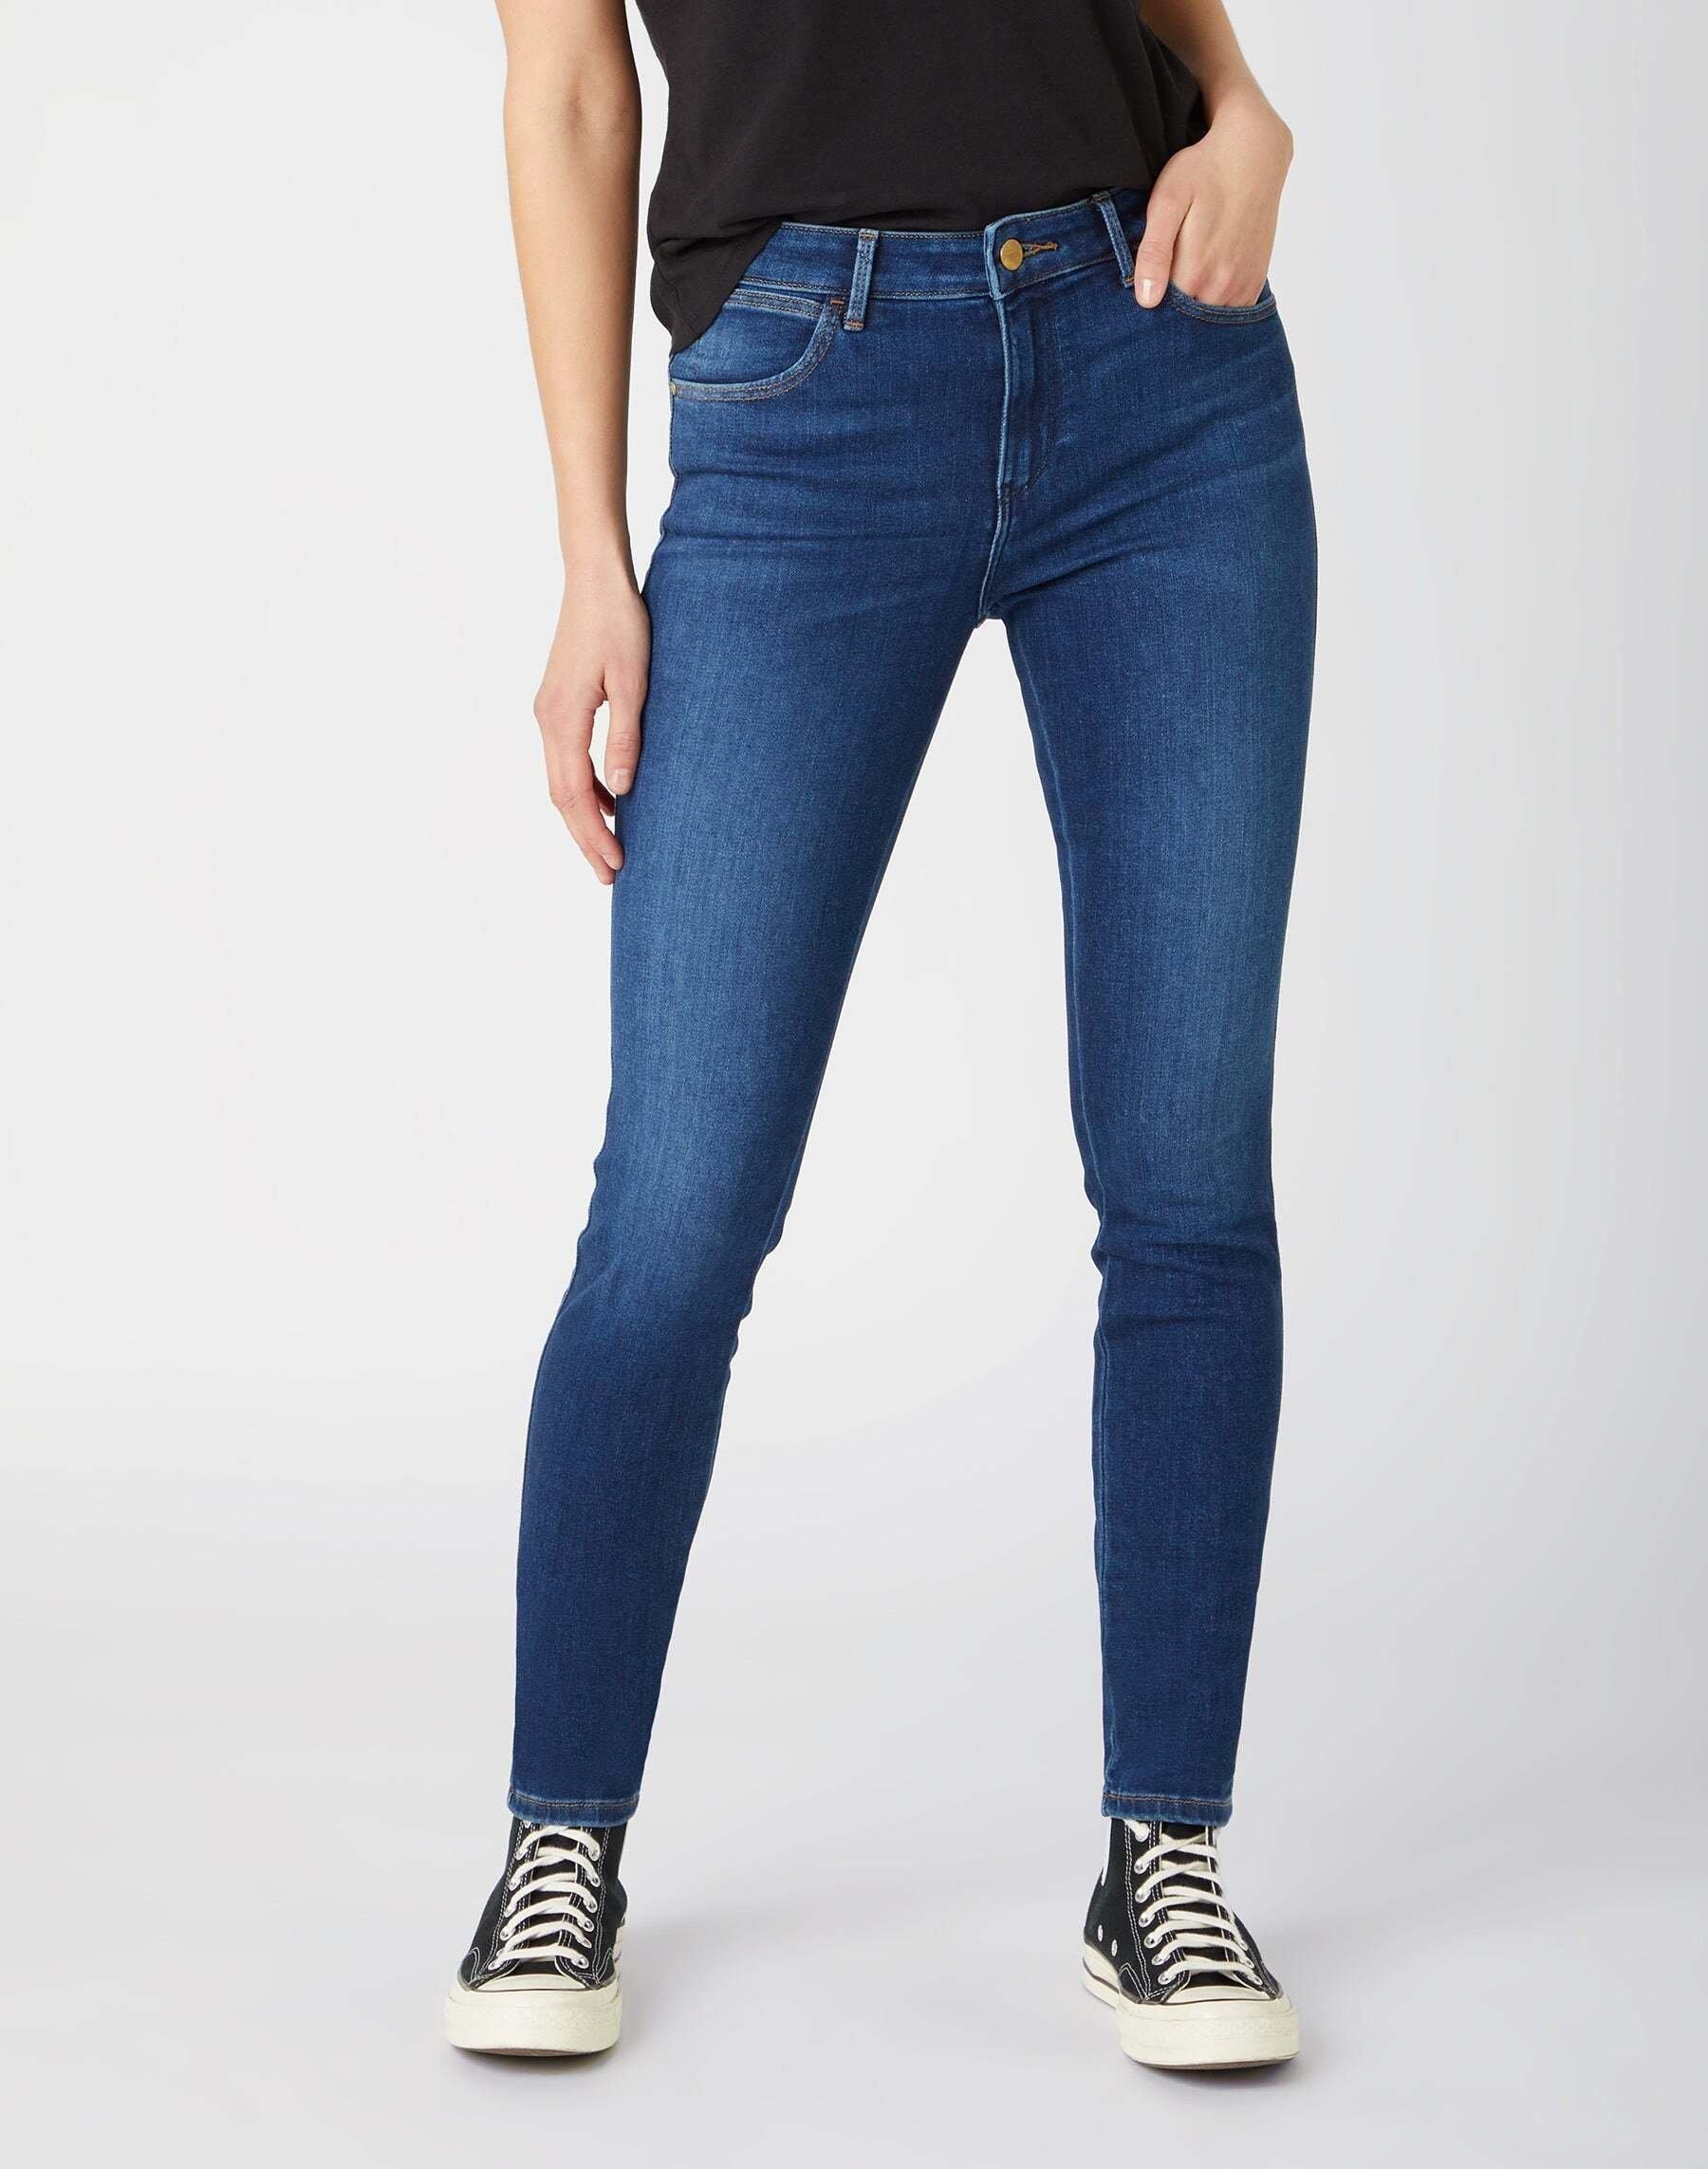 Jeans Skinny Fit Skinny Damen Blau Denim L32/W30 von Wrangler